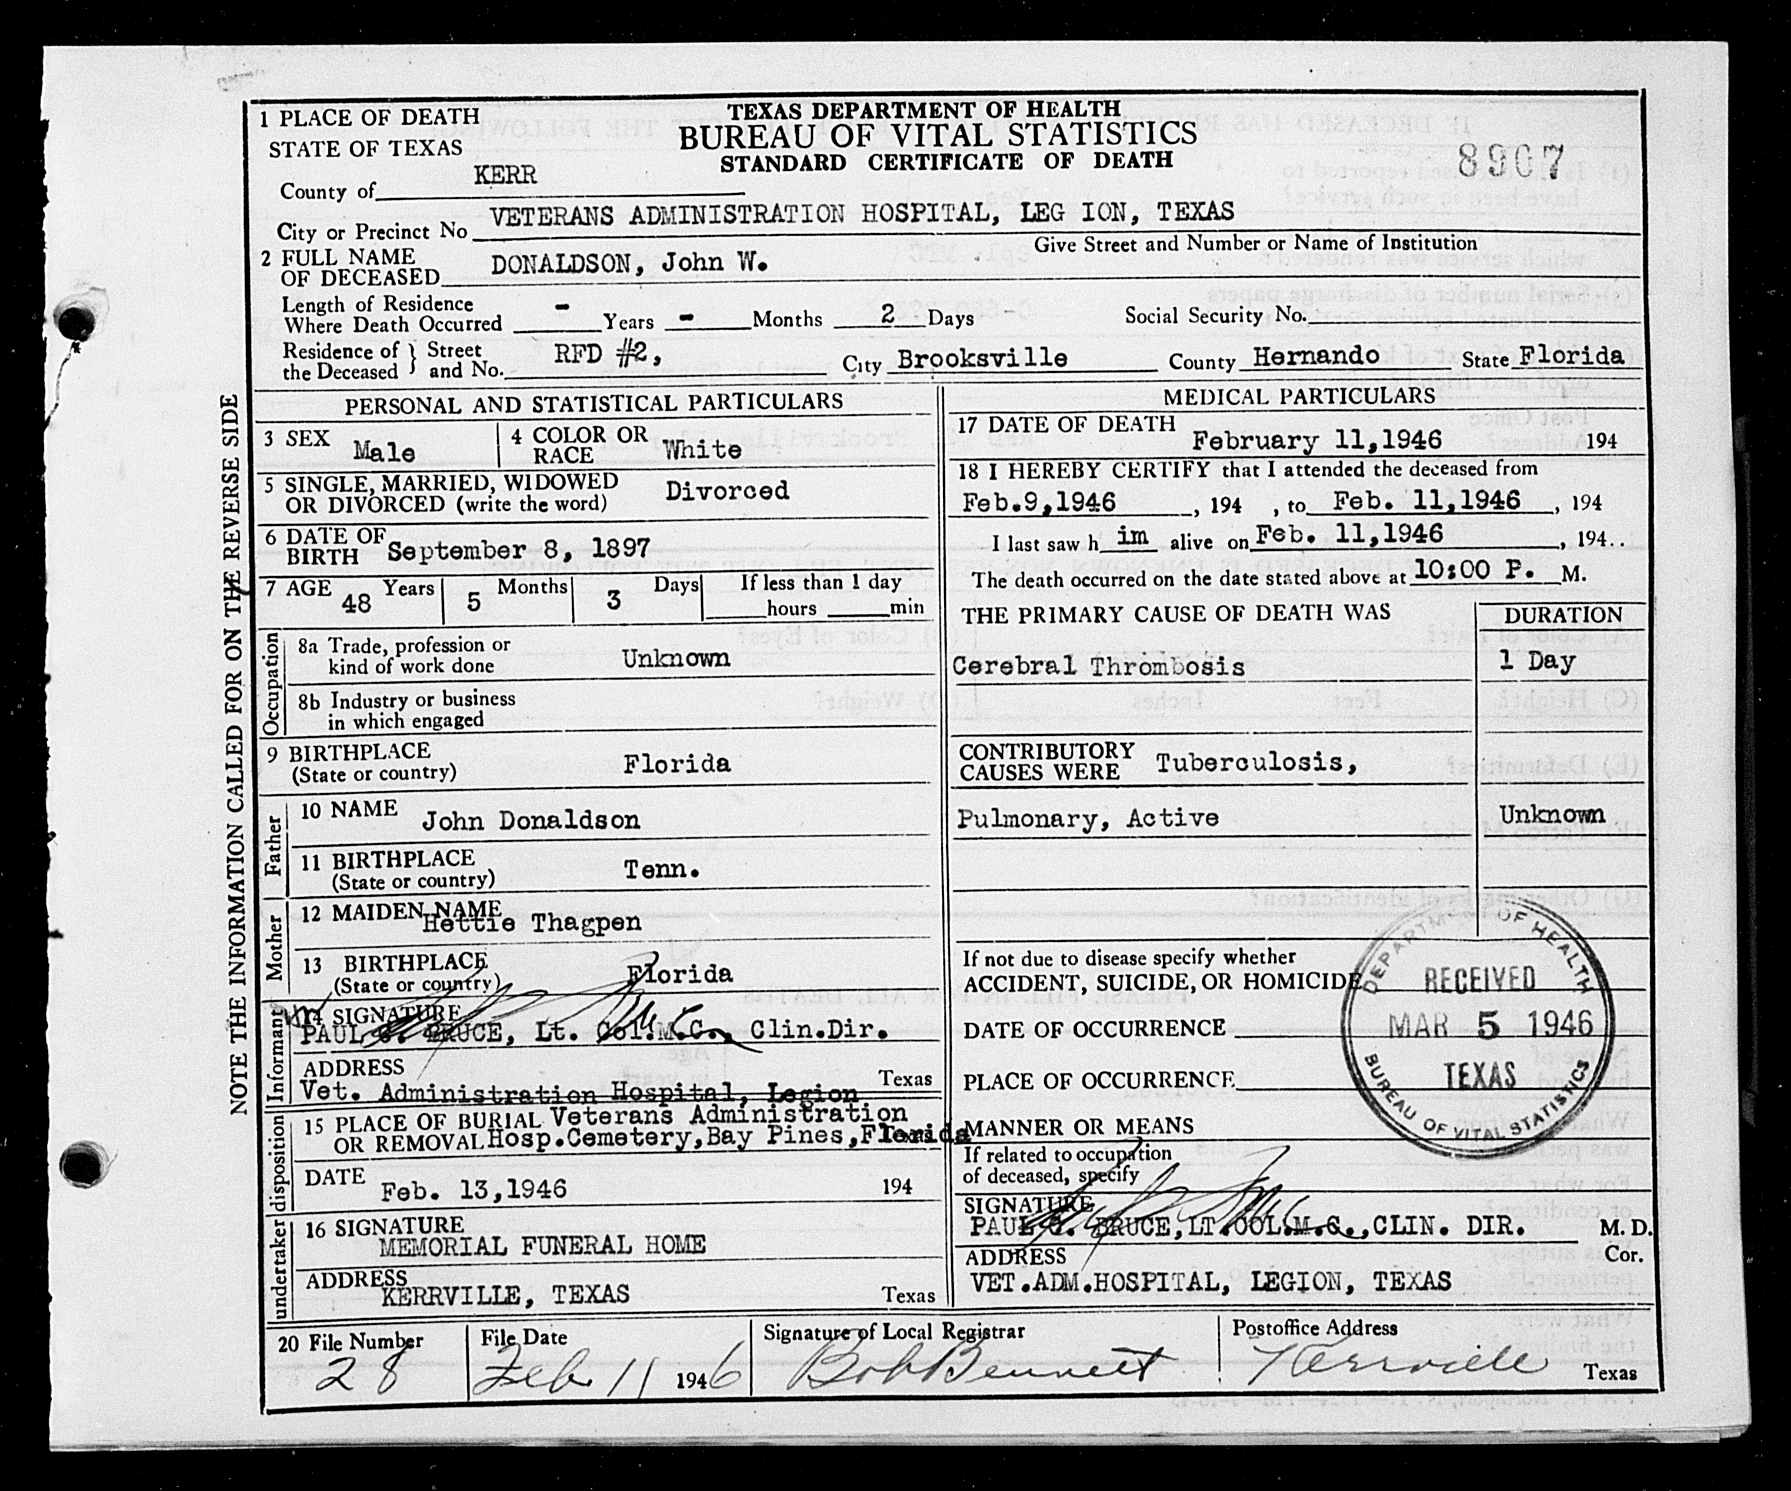 Donaldsons death certificate